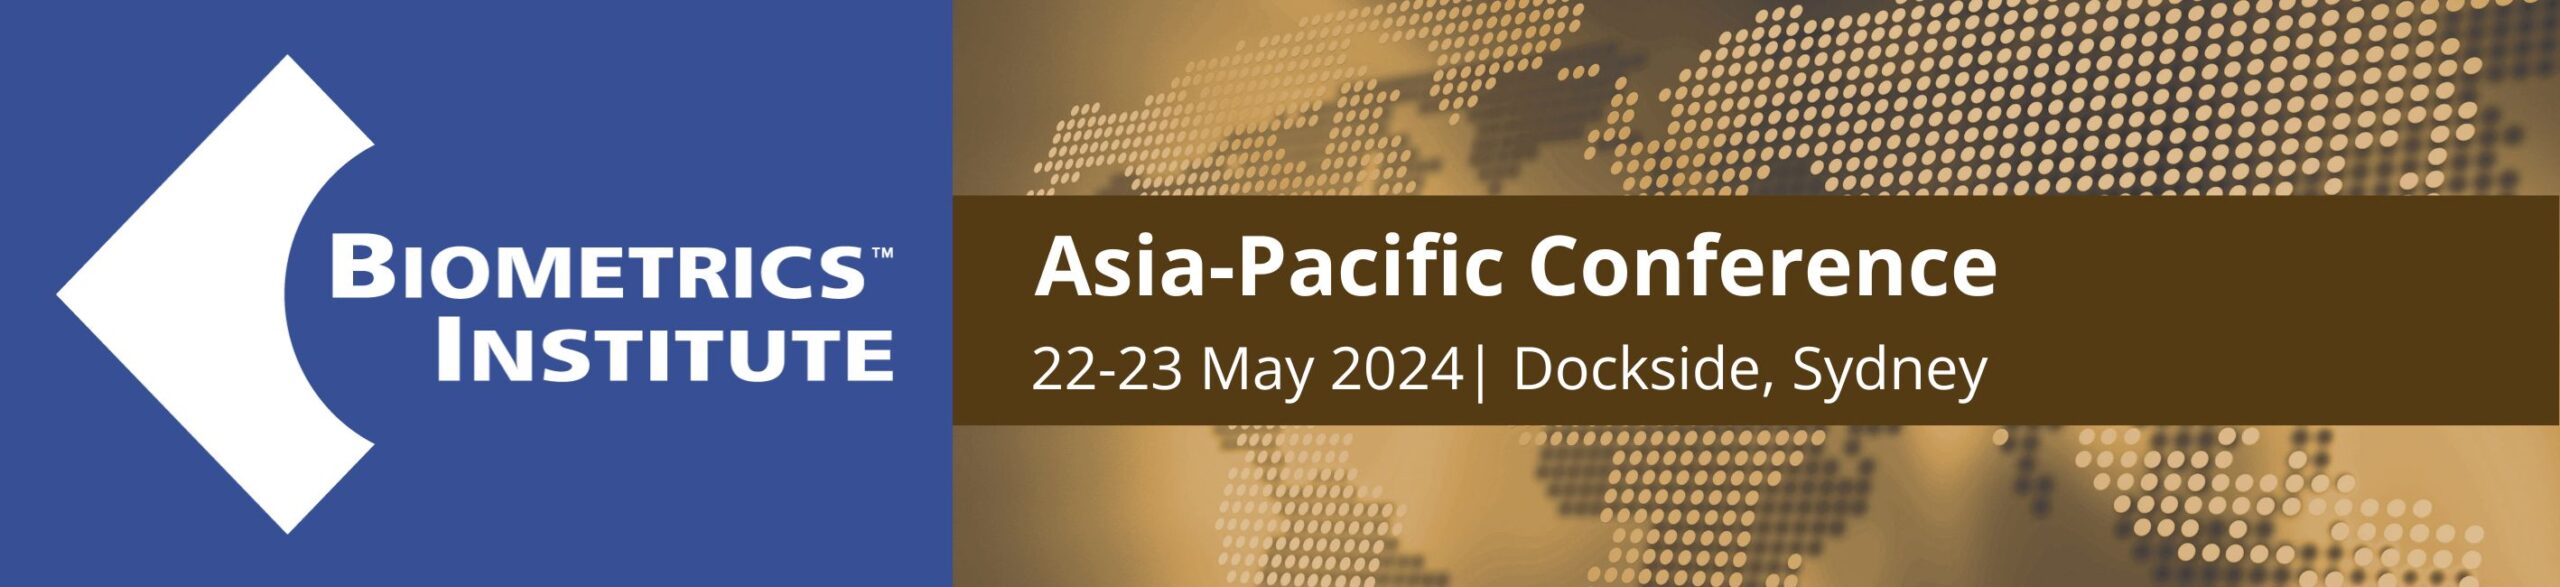 AsiaPacific Conference 2024 Biometrics Institute